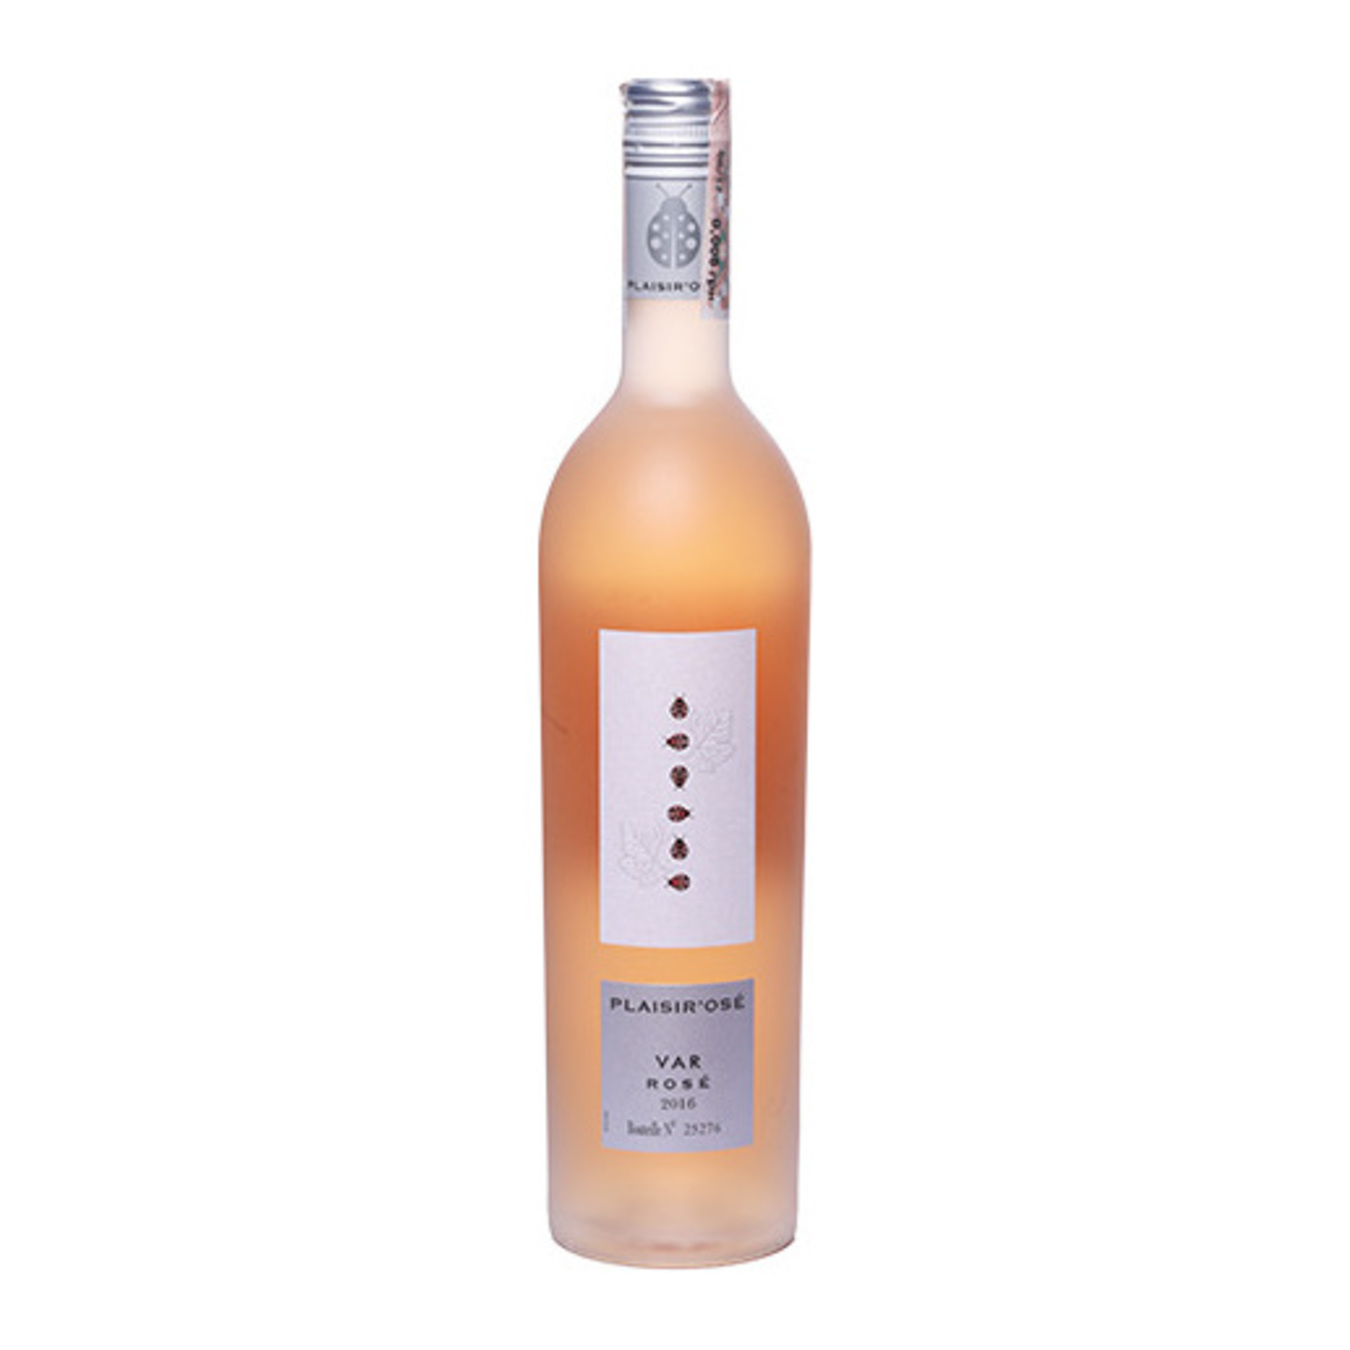 Вино Plaisir 'Ose Rose Var розовое сухое 12,5% 0,75л